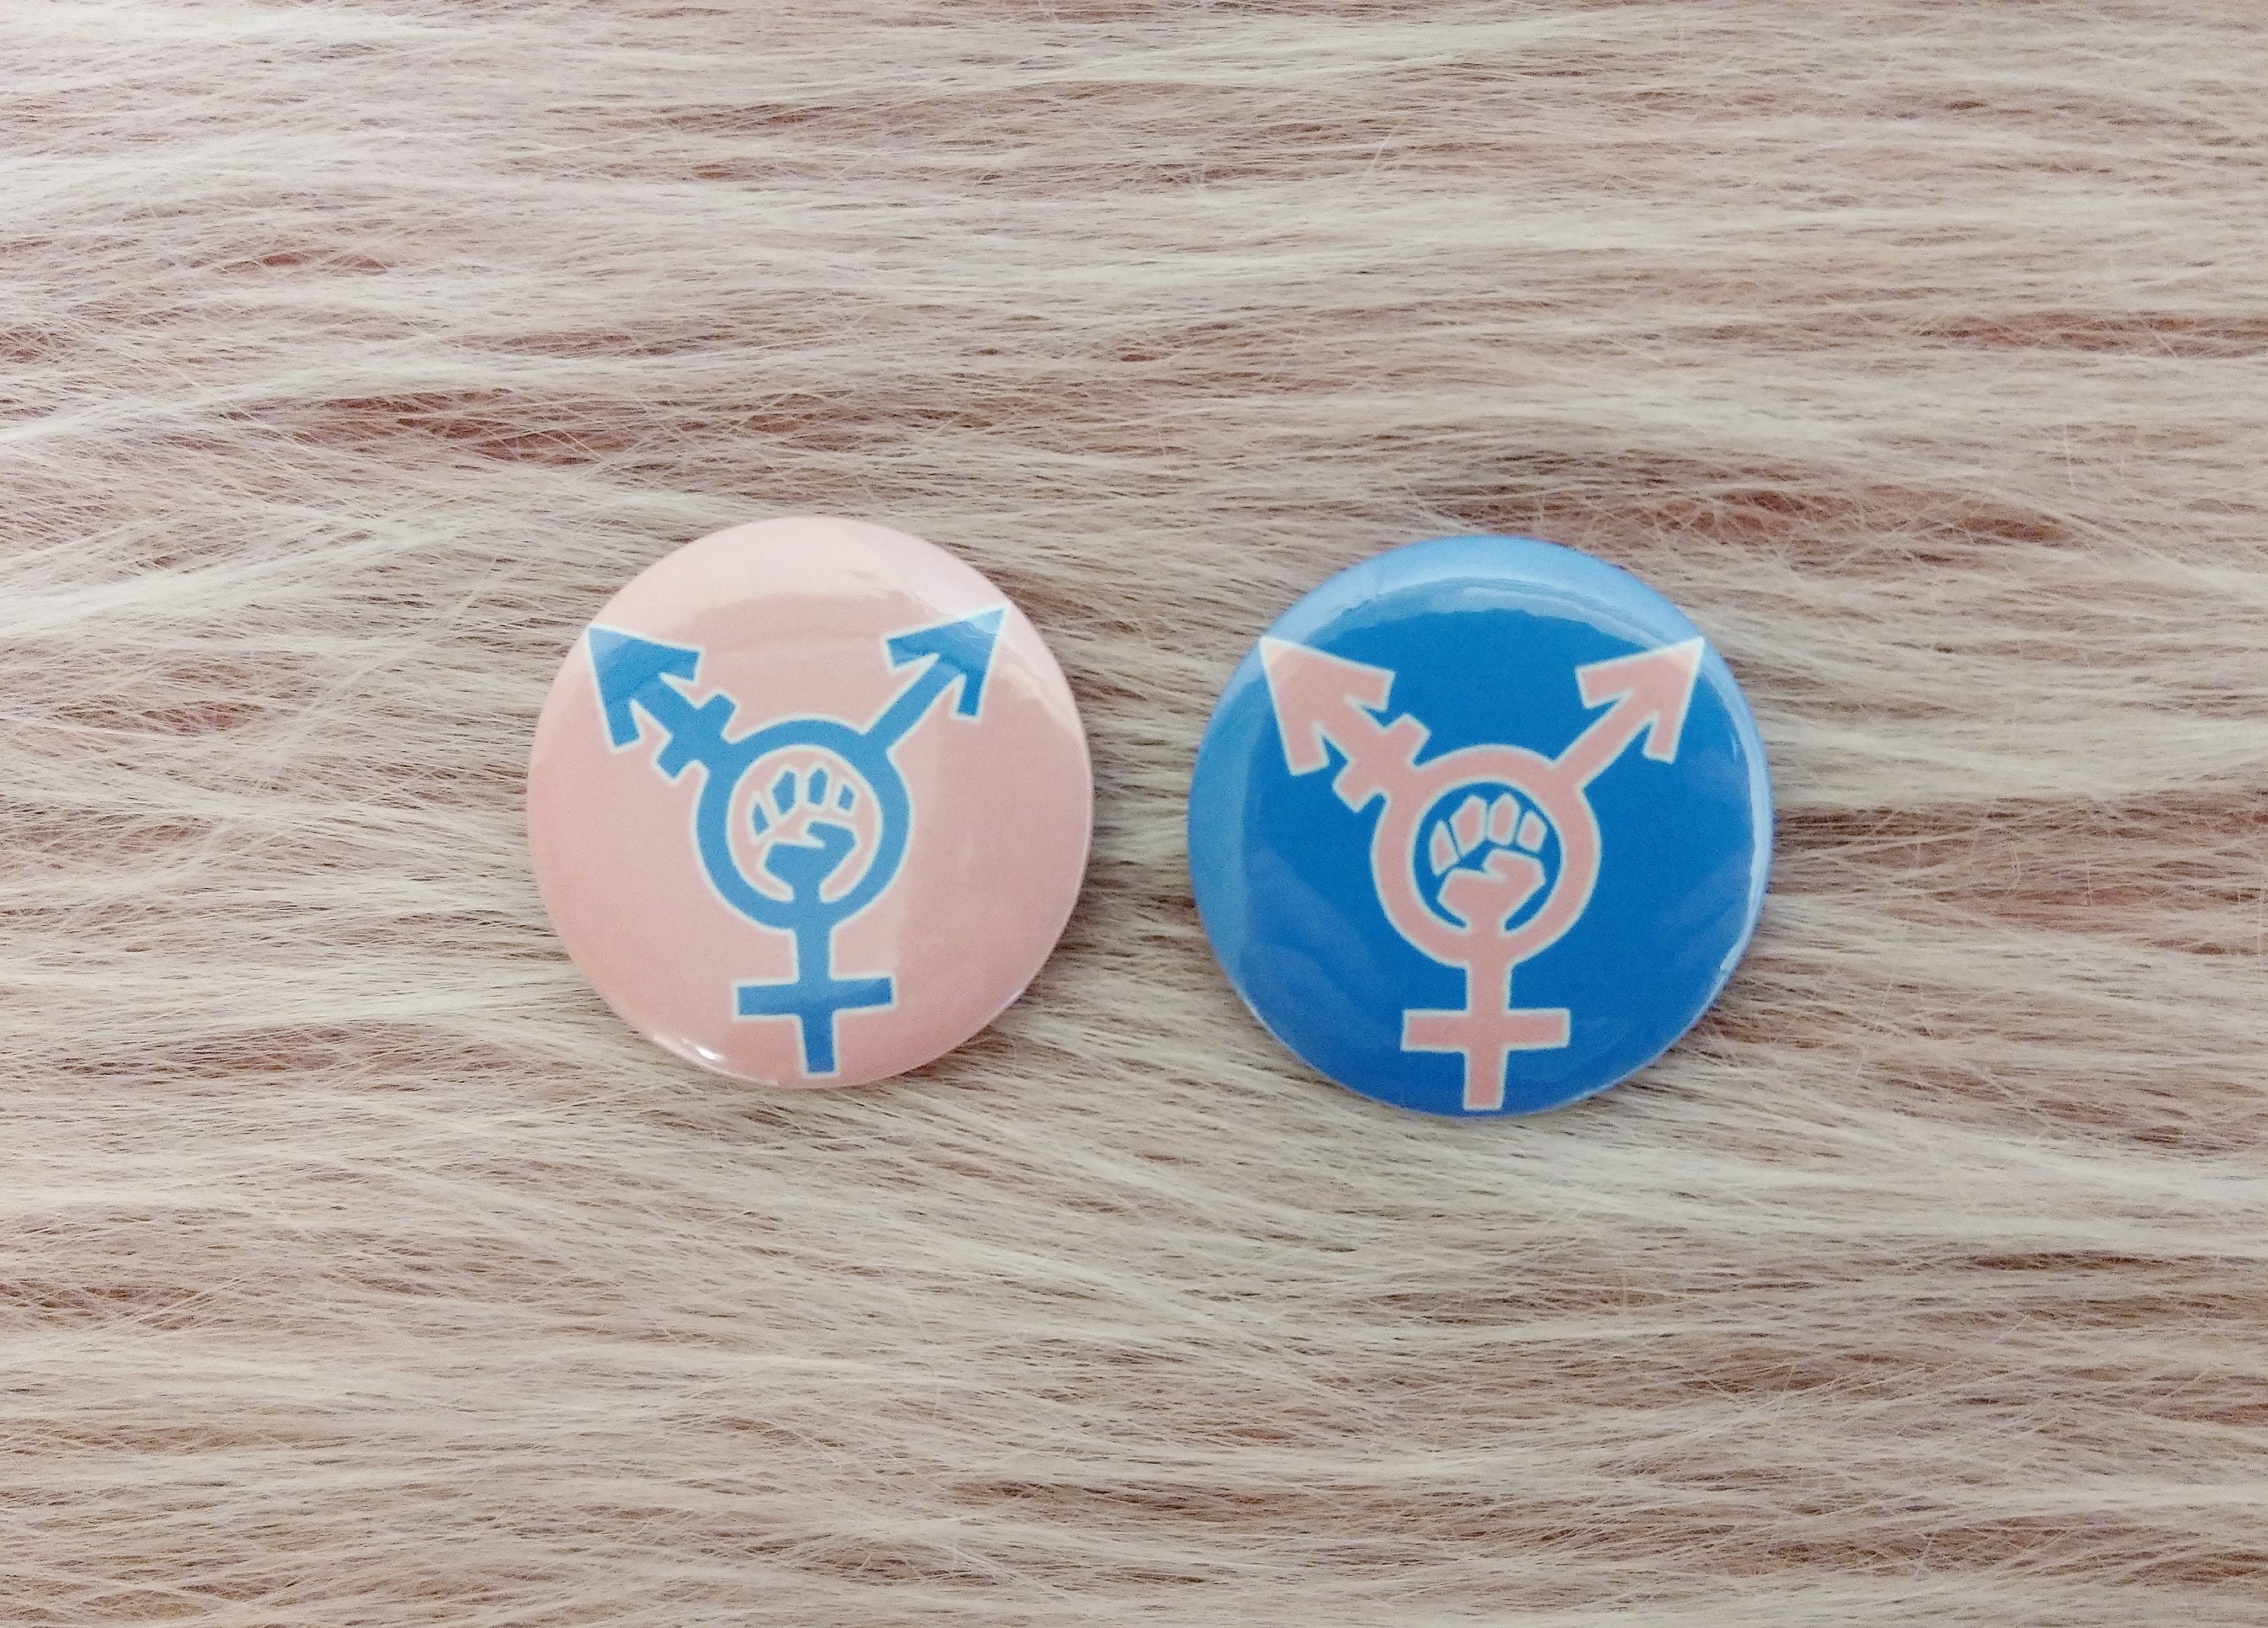 Gender Equality Badge Feminist Pins Etsy